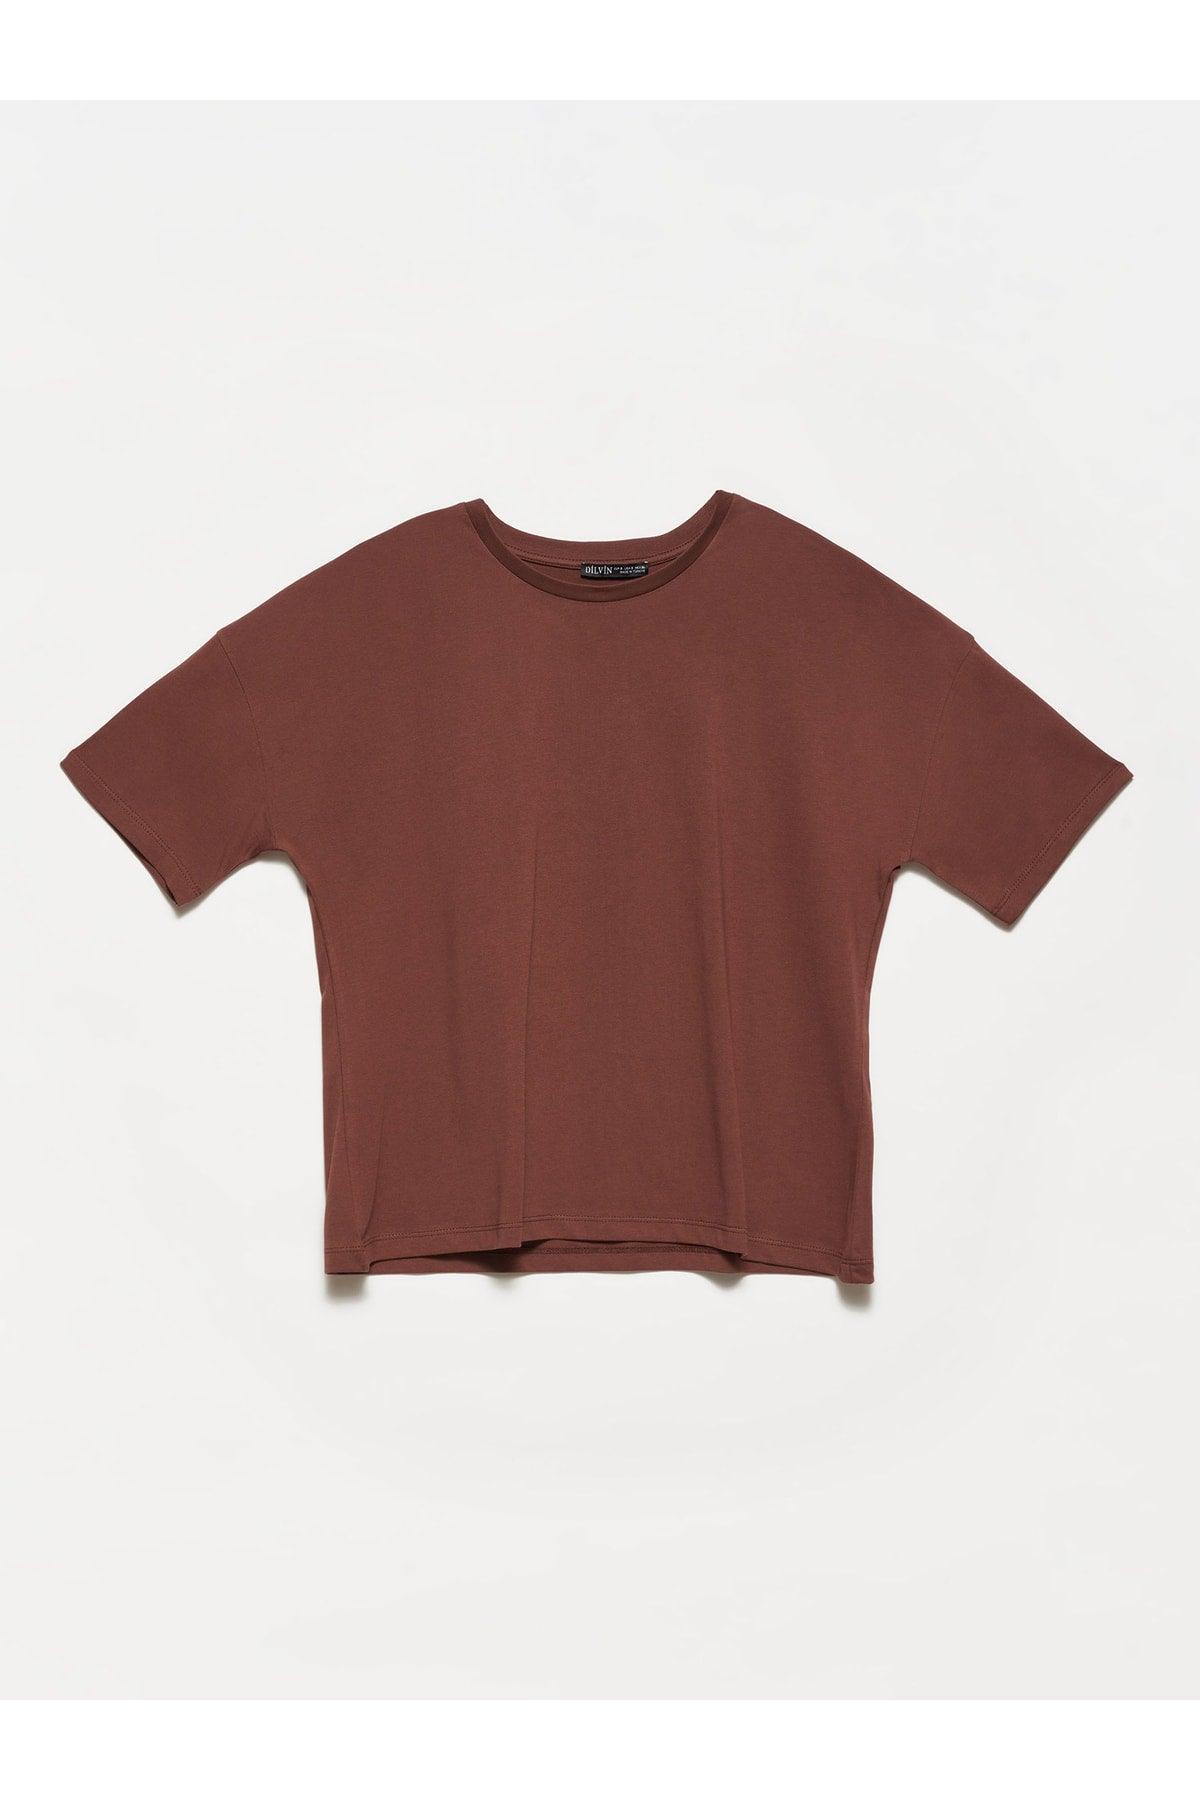 3683 Basic T-shirt-brown - Swordslife